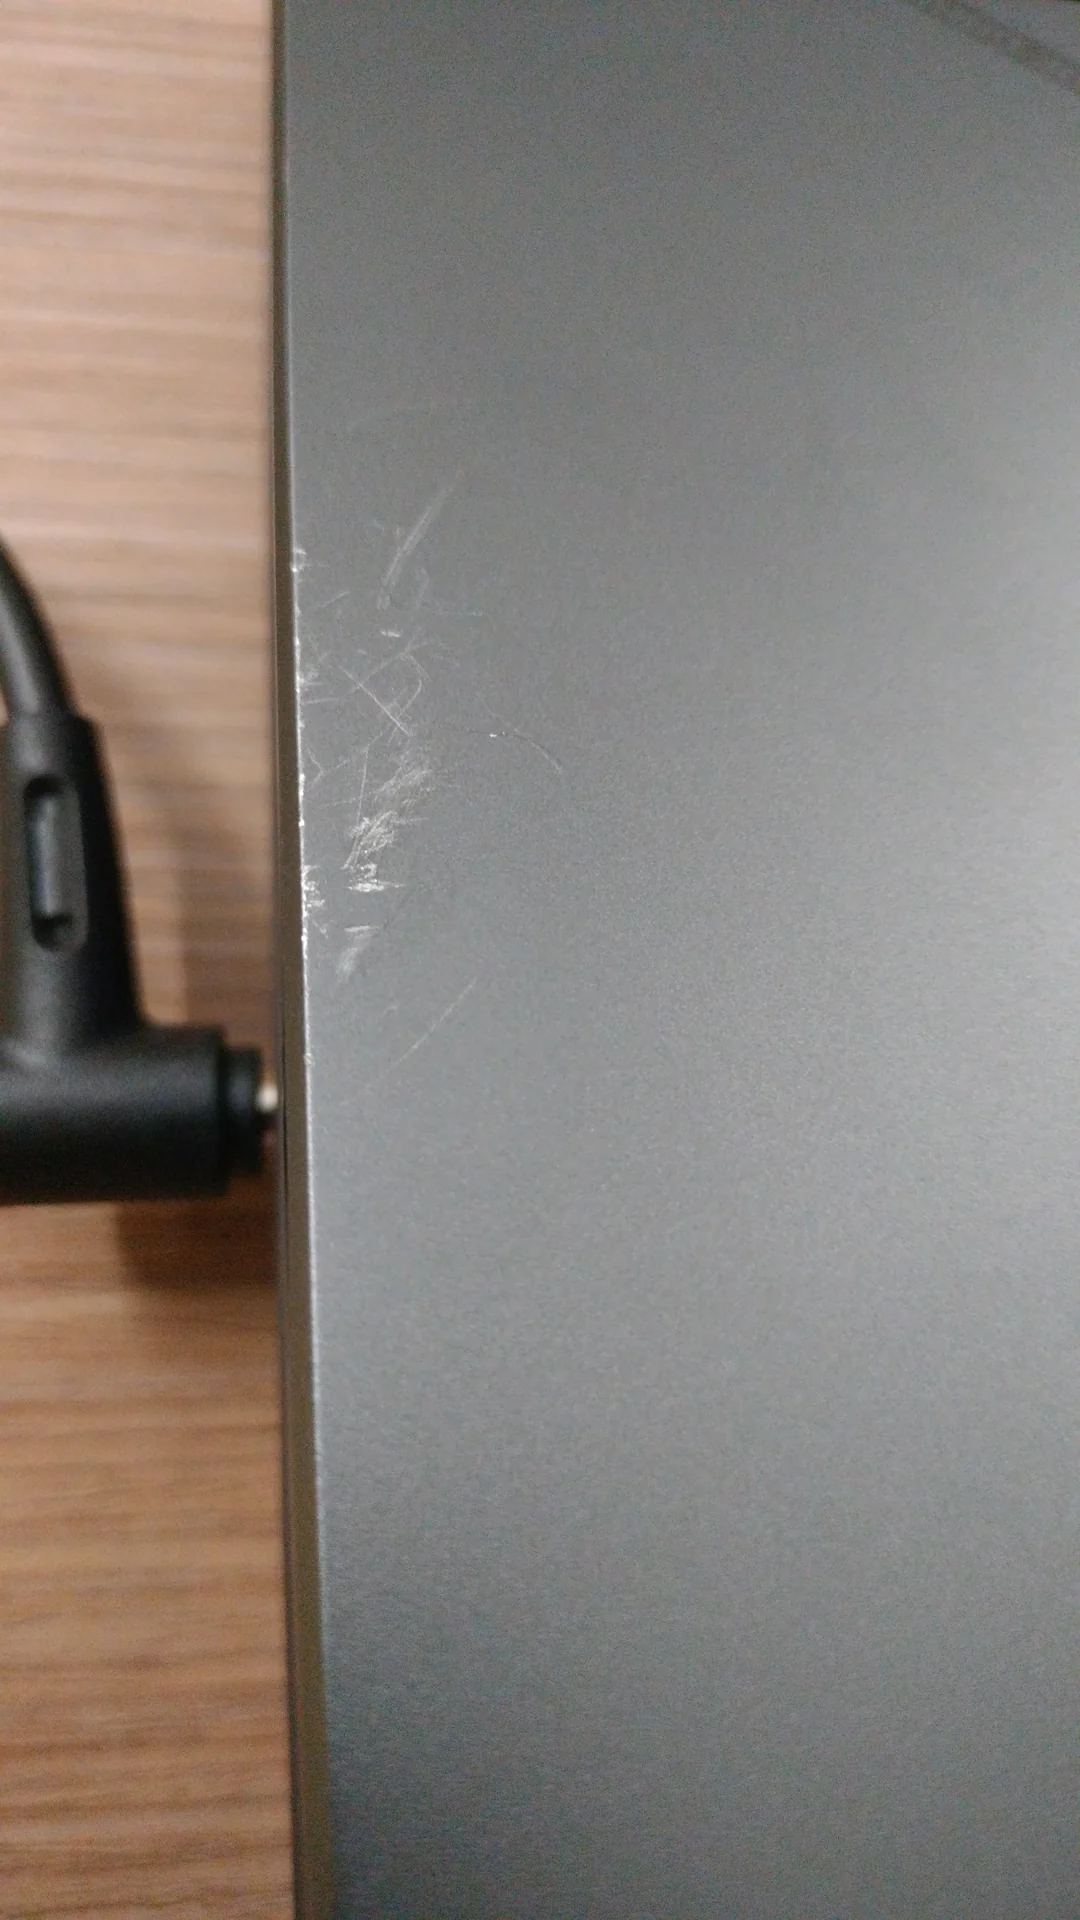 Scratched Laptop